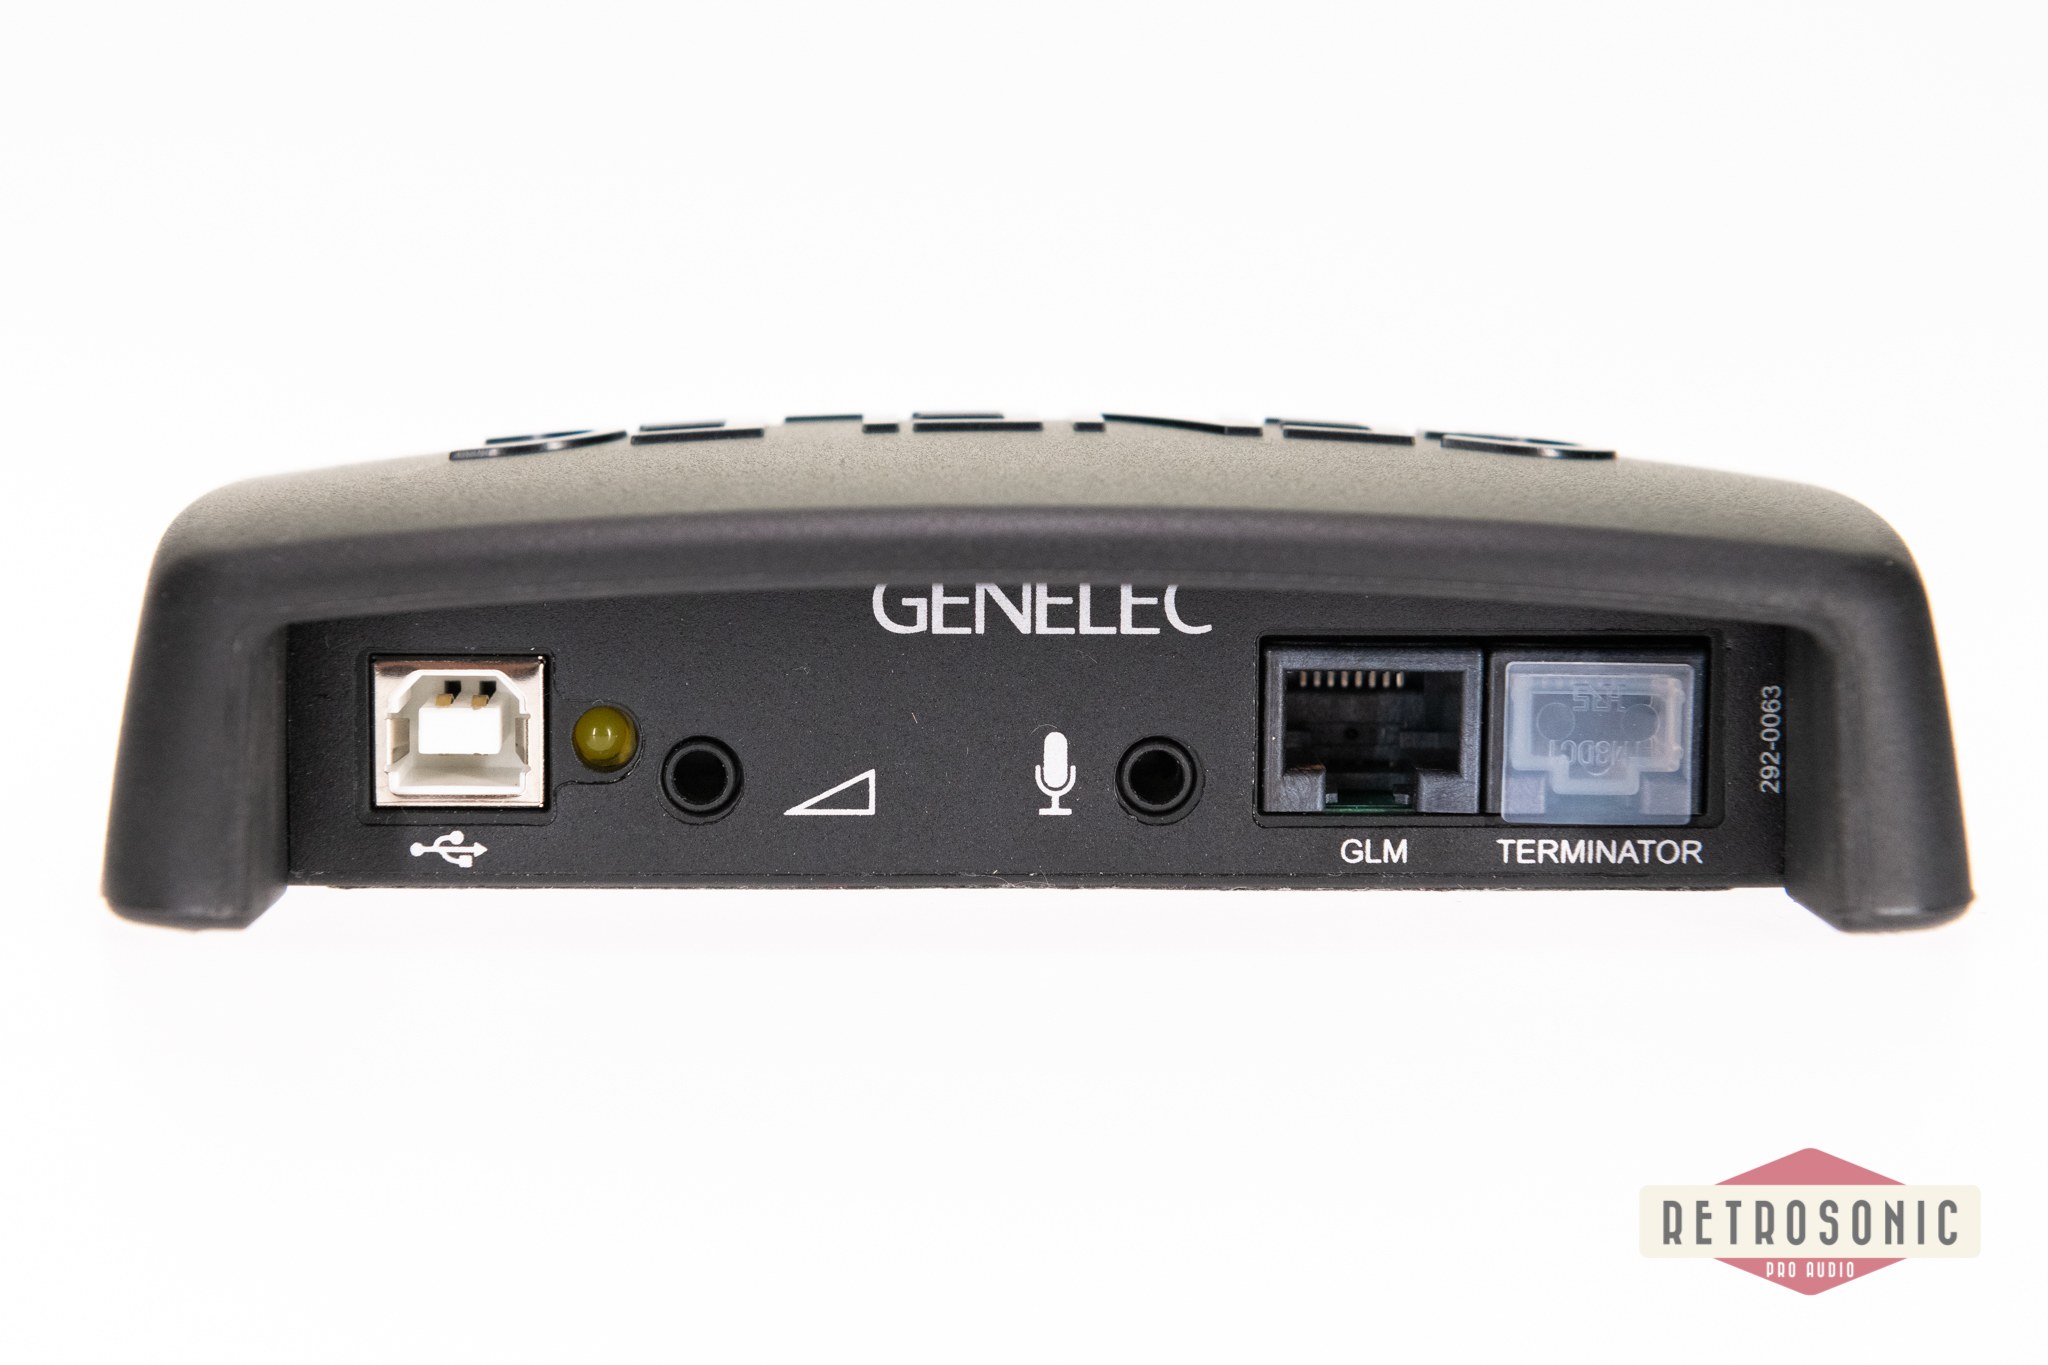 Genelec GLM kit for SAM monitor pair